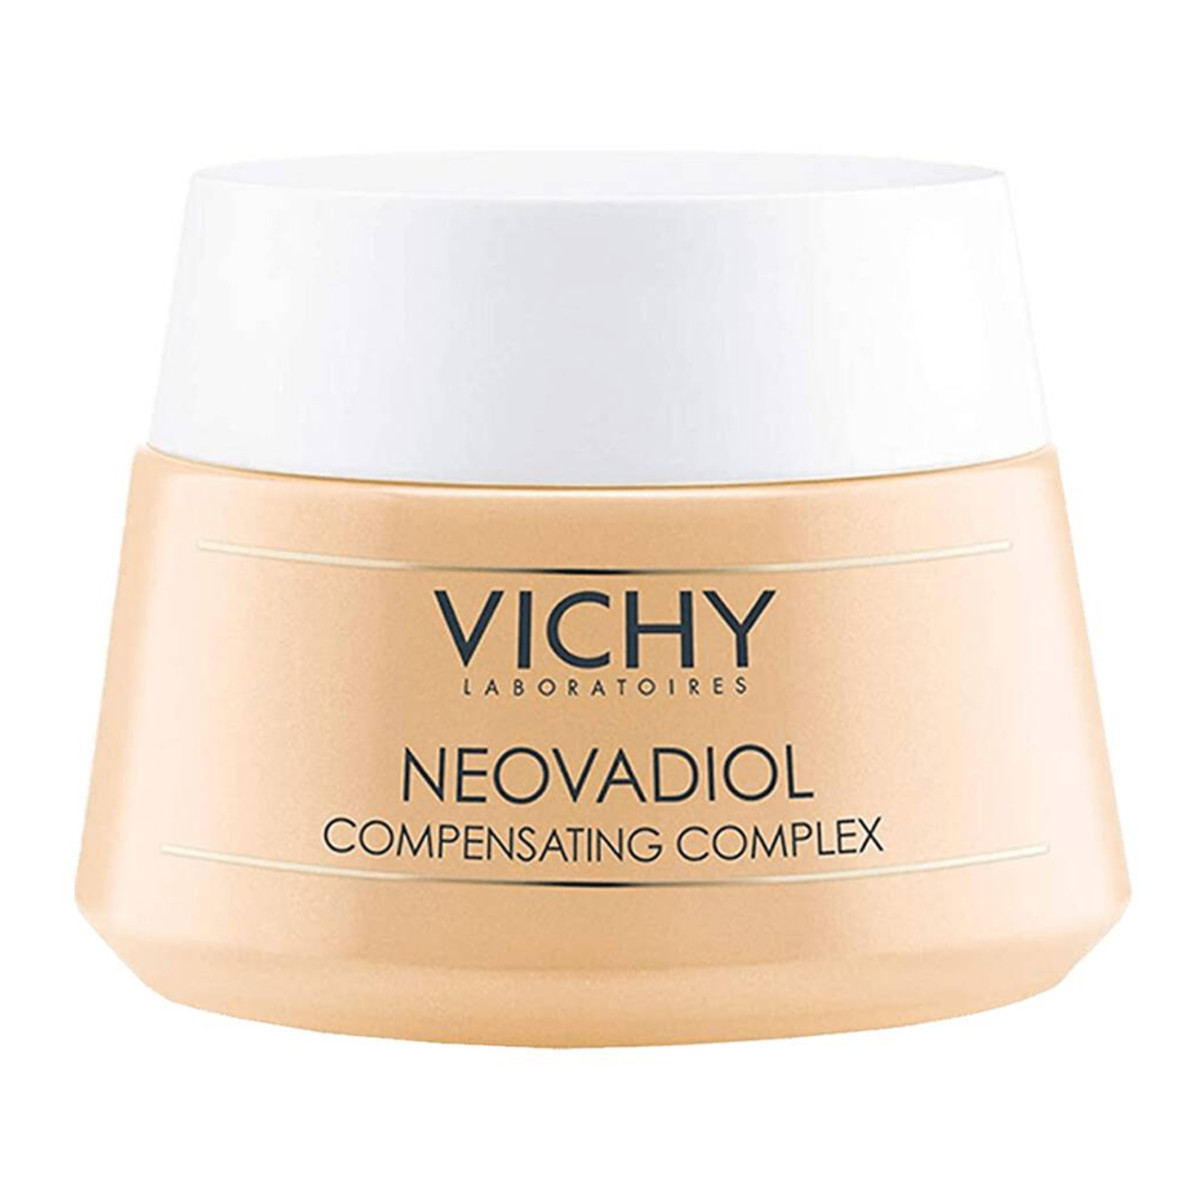 Vichy Neovadiol Compensating Complex ($59.95 $29.97 CAD at lorealbeautyoutlet.ca*)